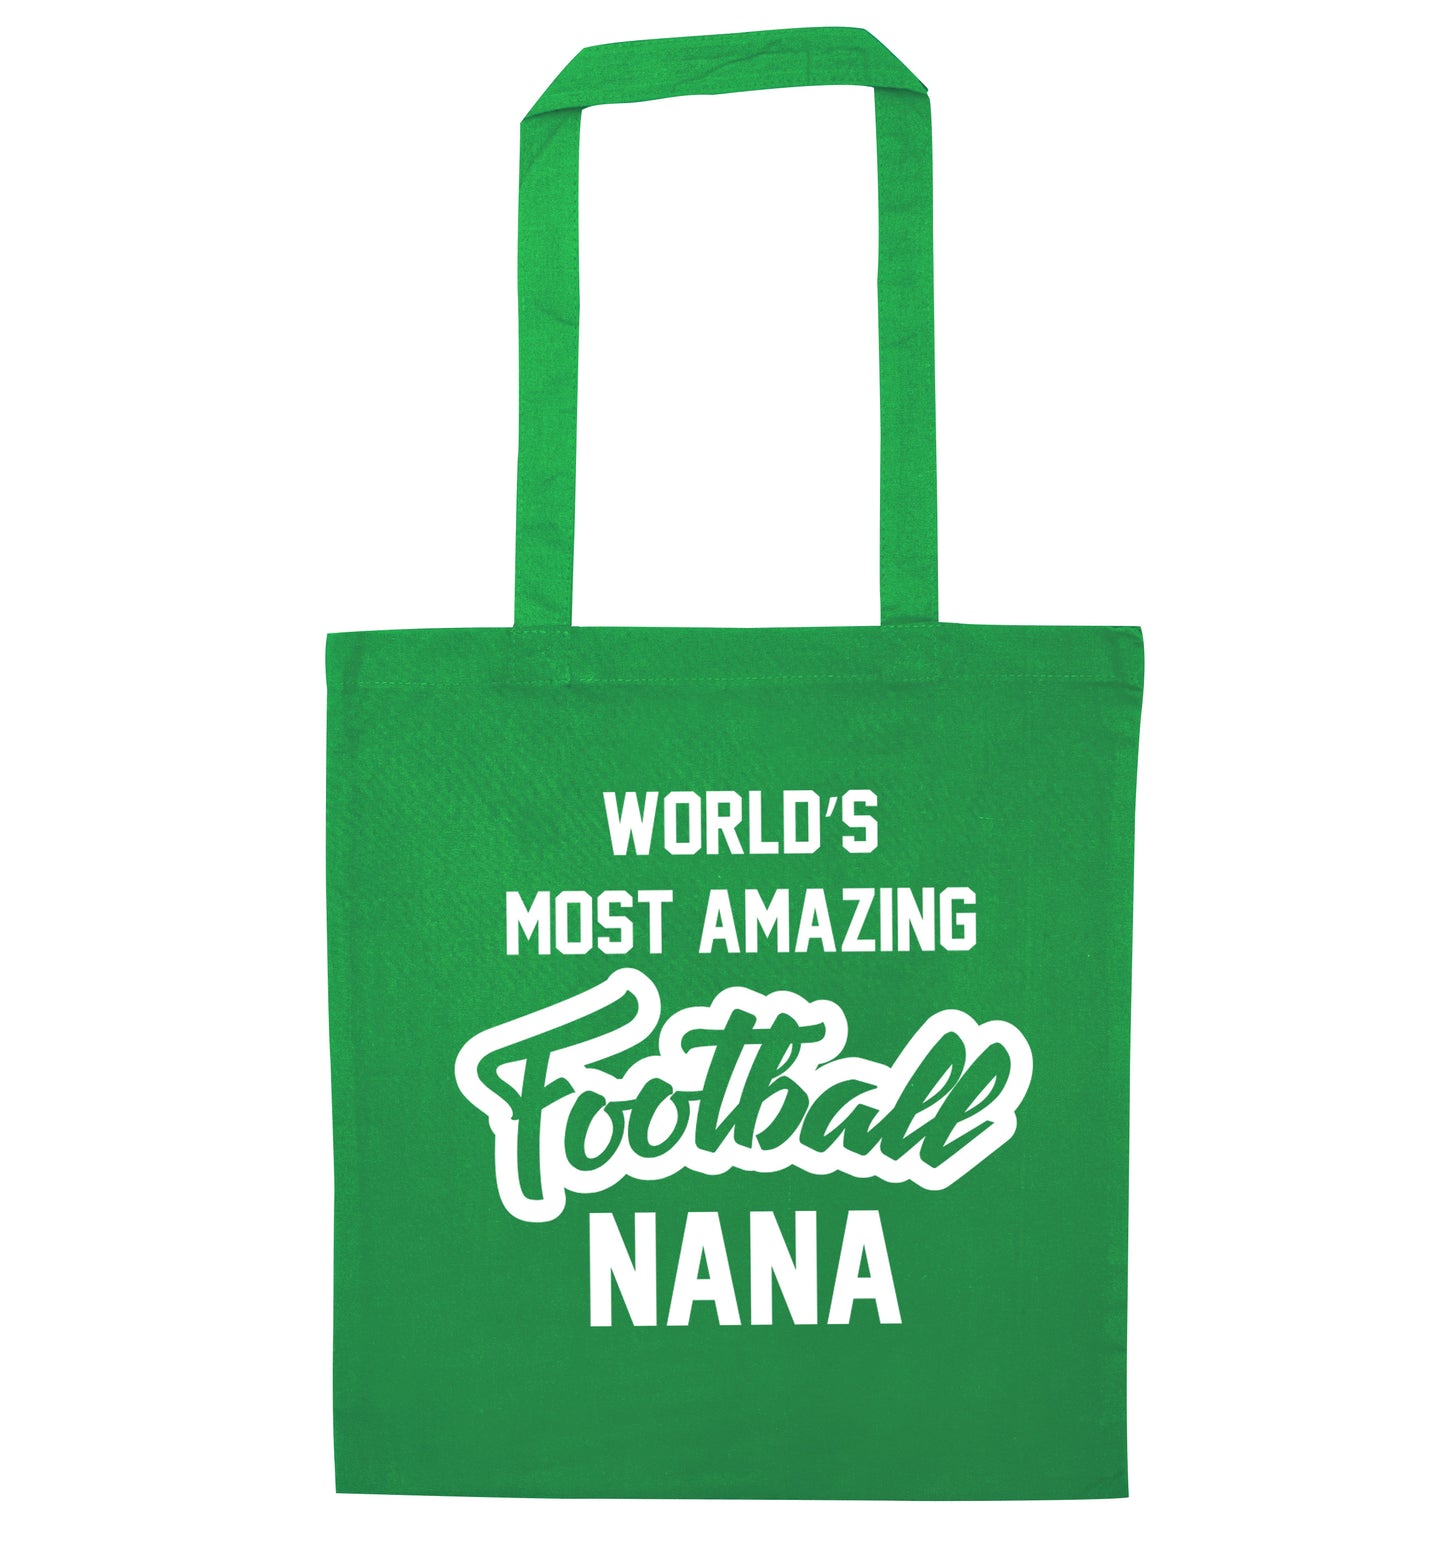 Worlds most amazing football nana green tote bag